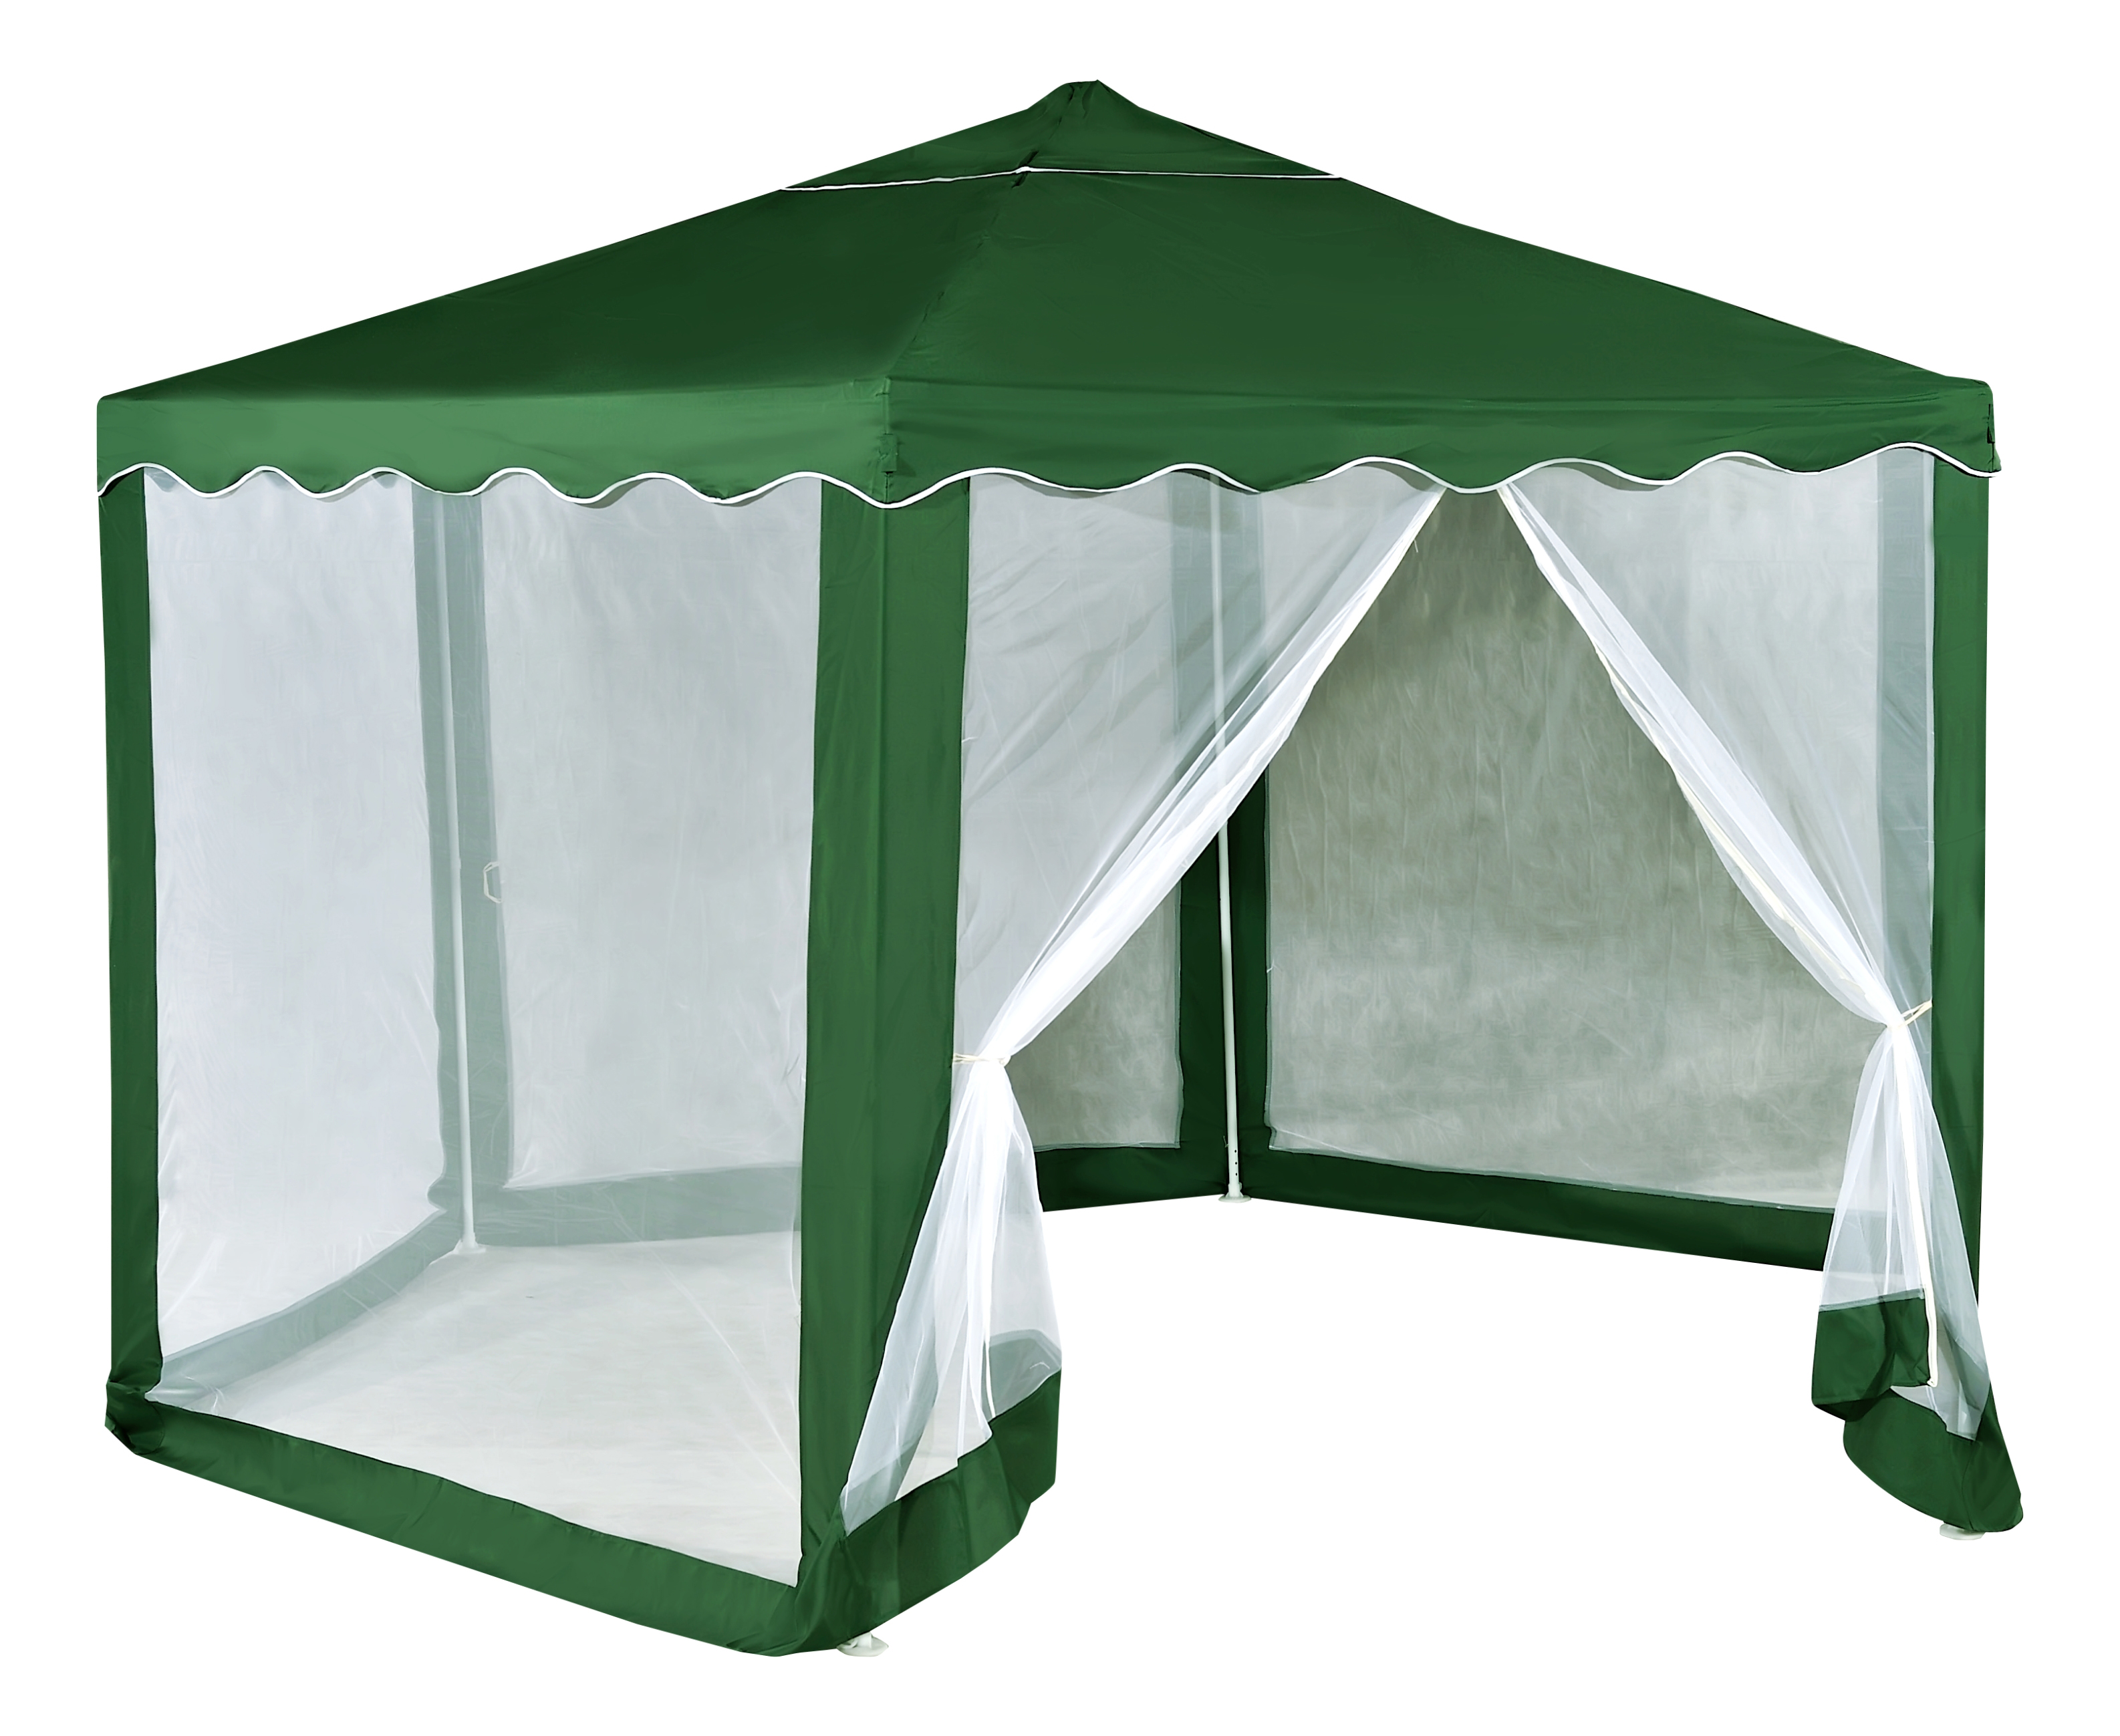 Садовый шатер Green Glade 1003 350 х 400 см. Описание, характеристики, цена...